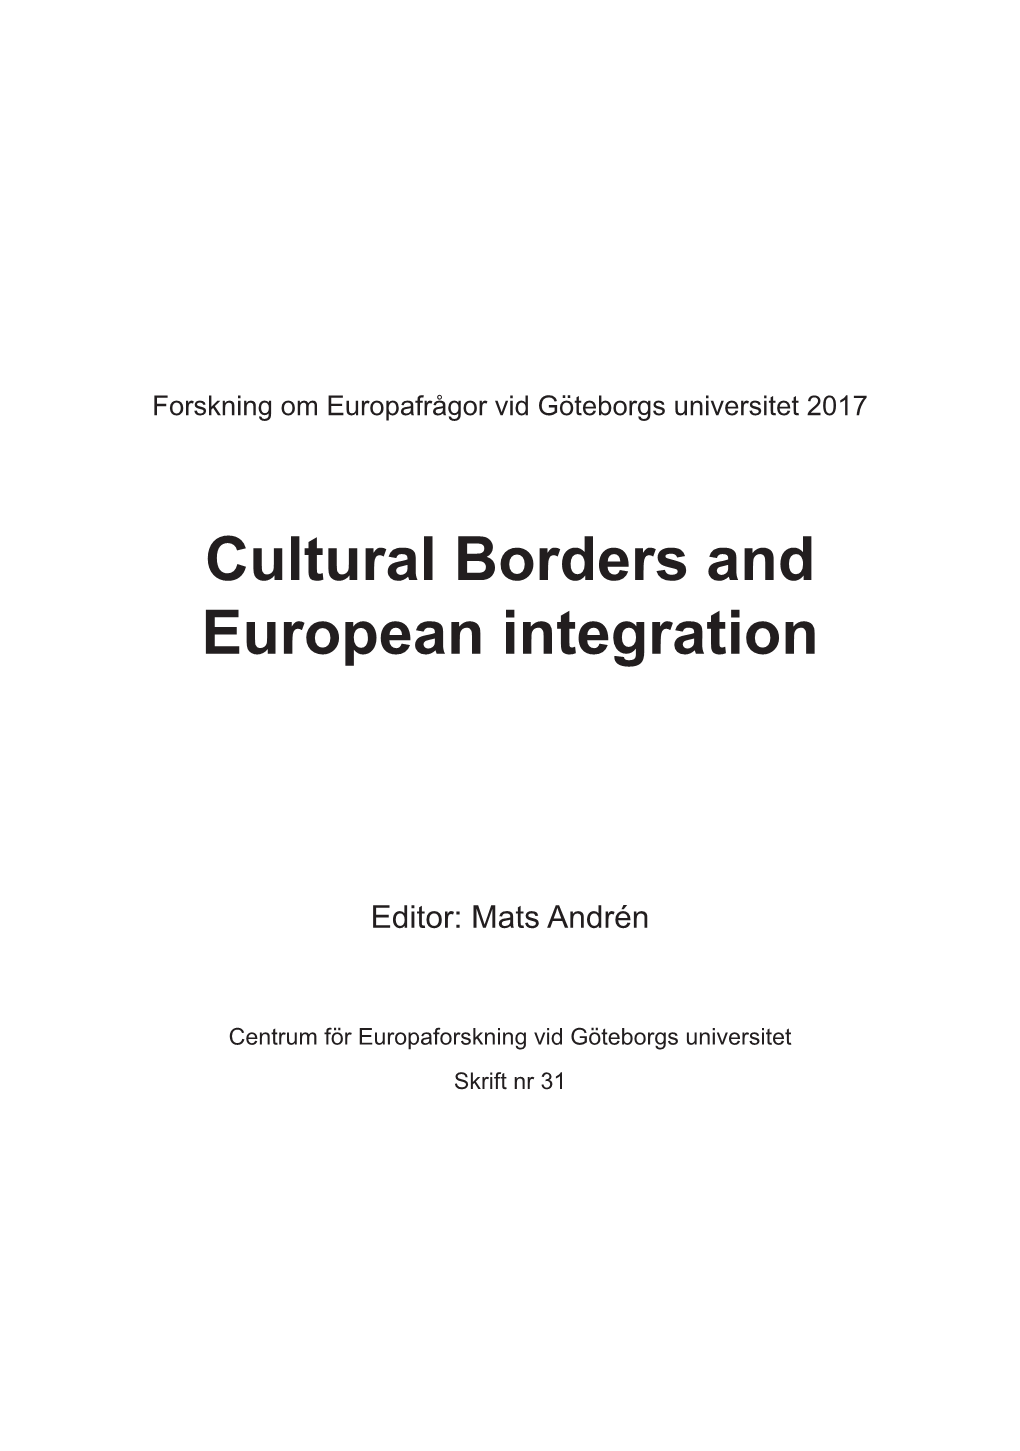 Cultural Borders and European Integration